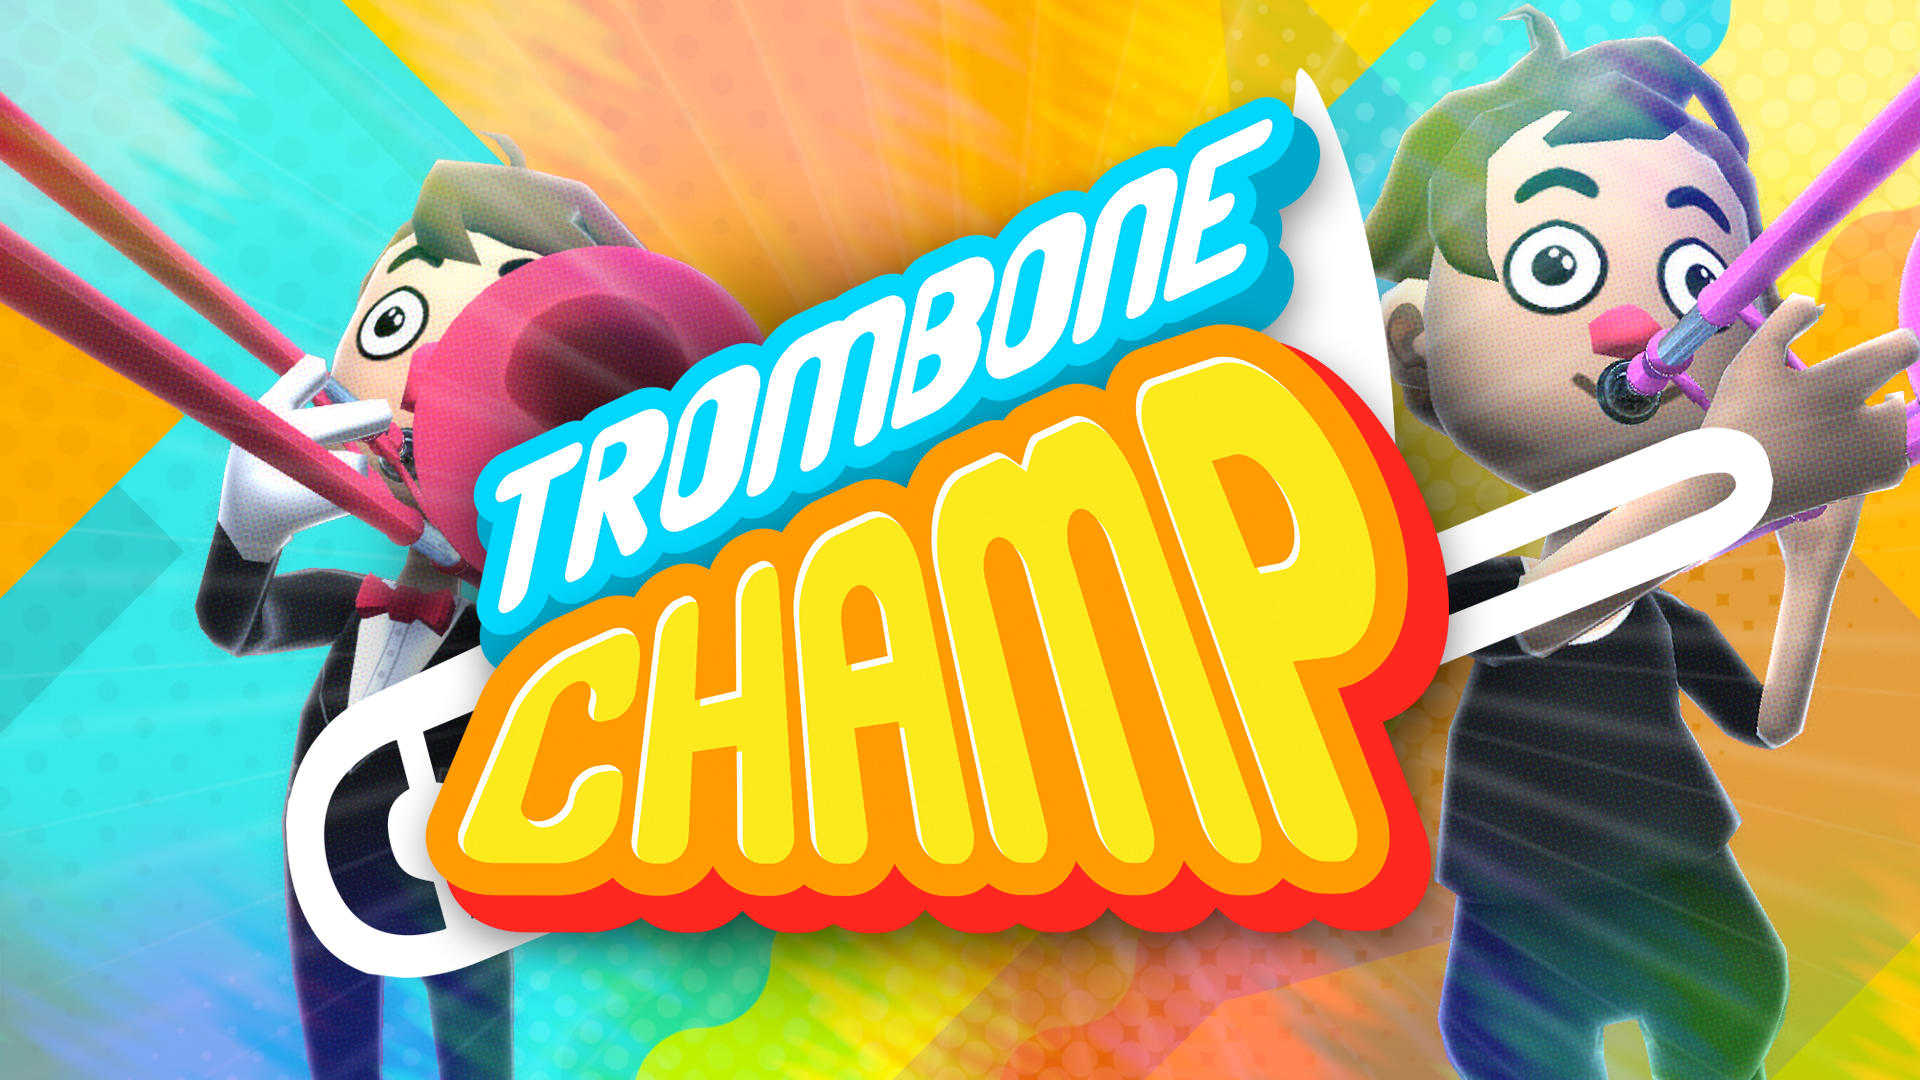 Trombone Champ 1